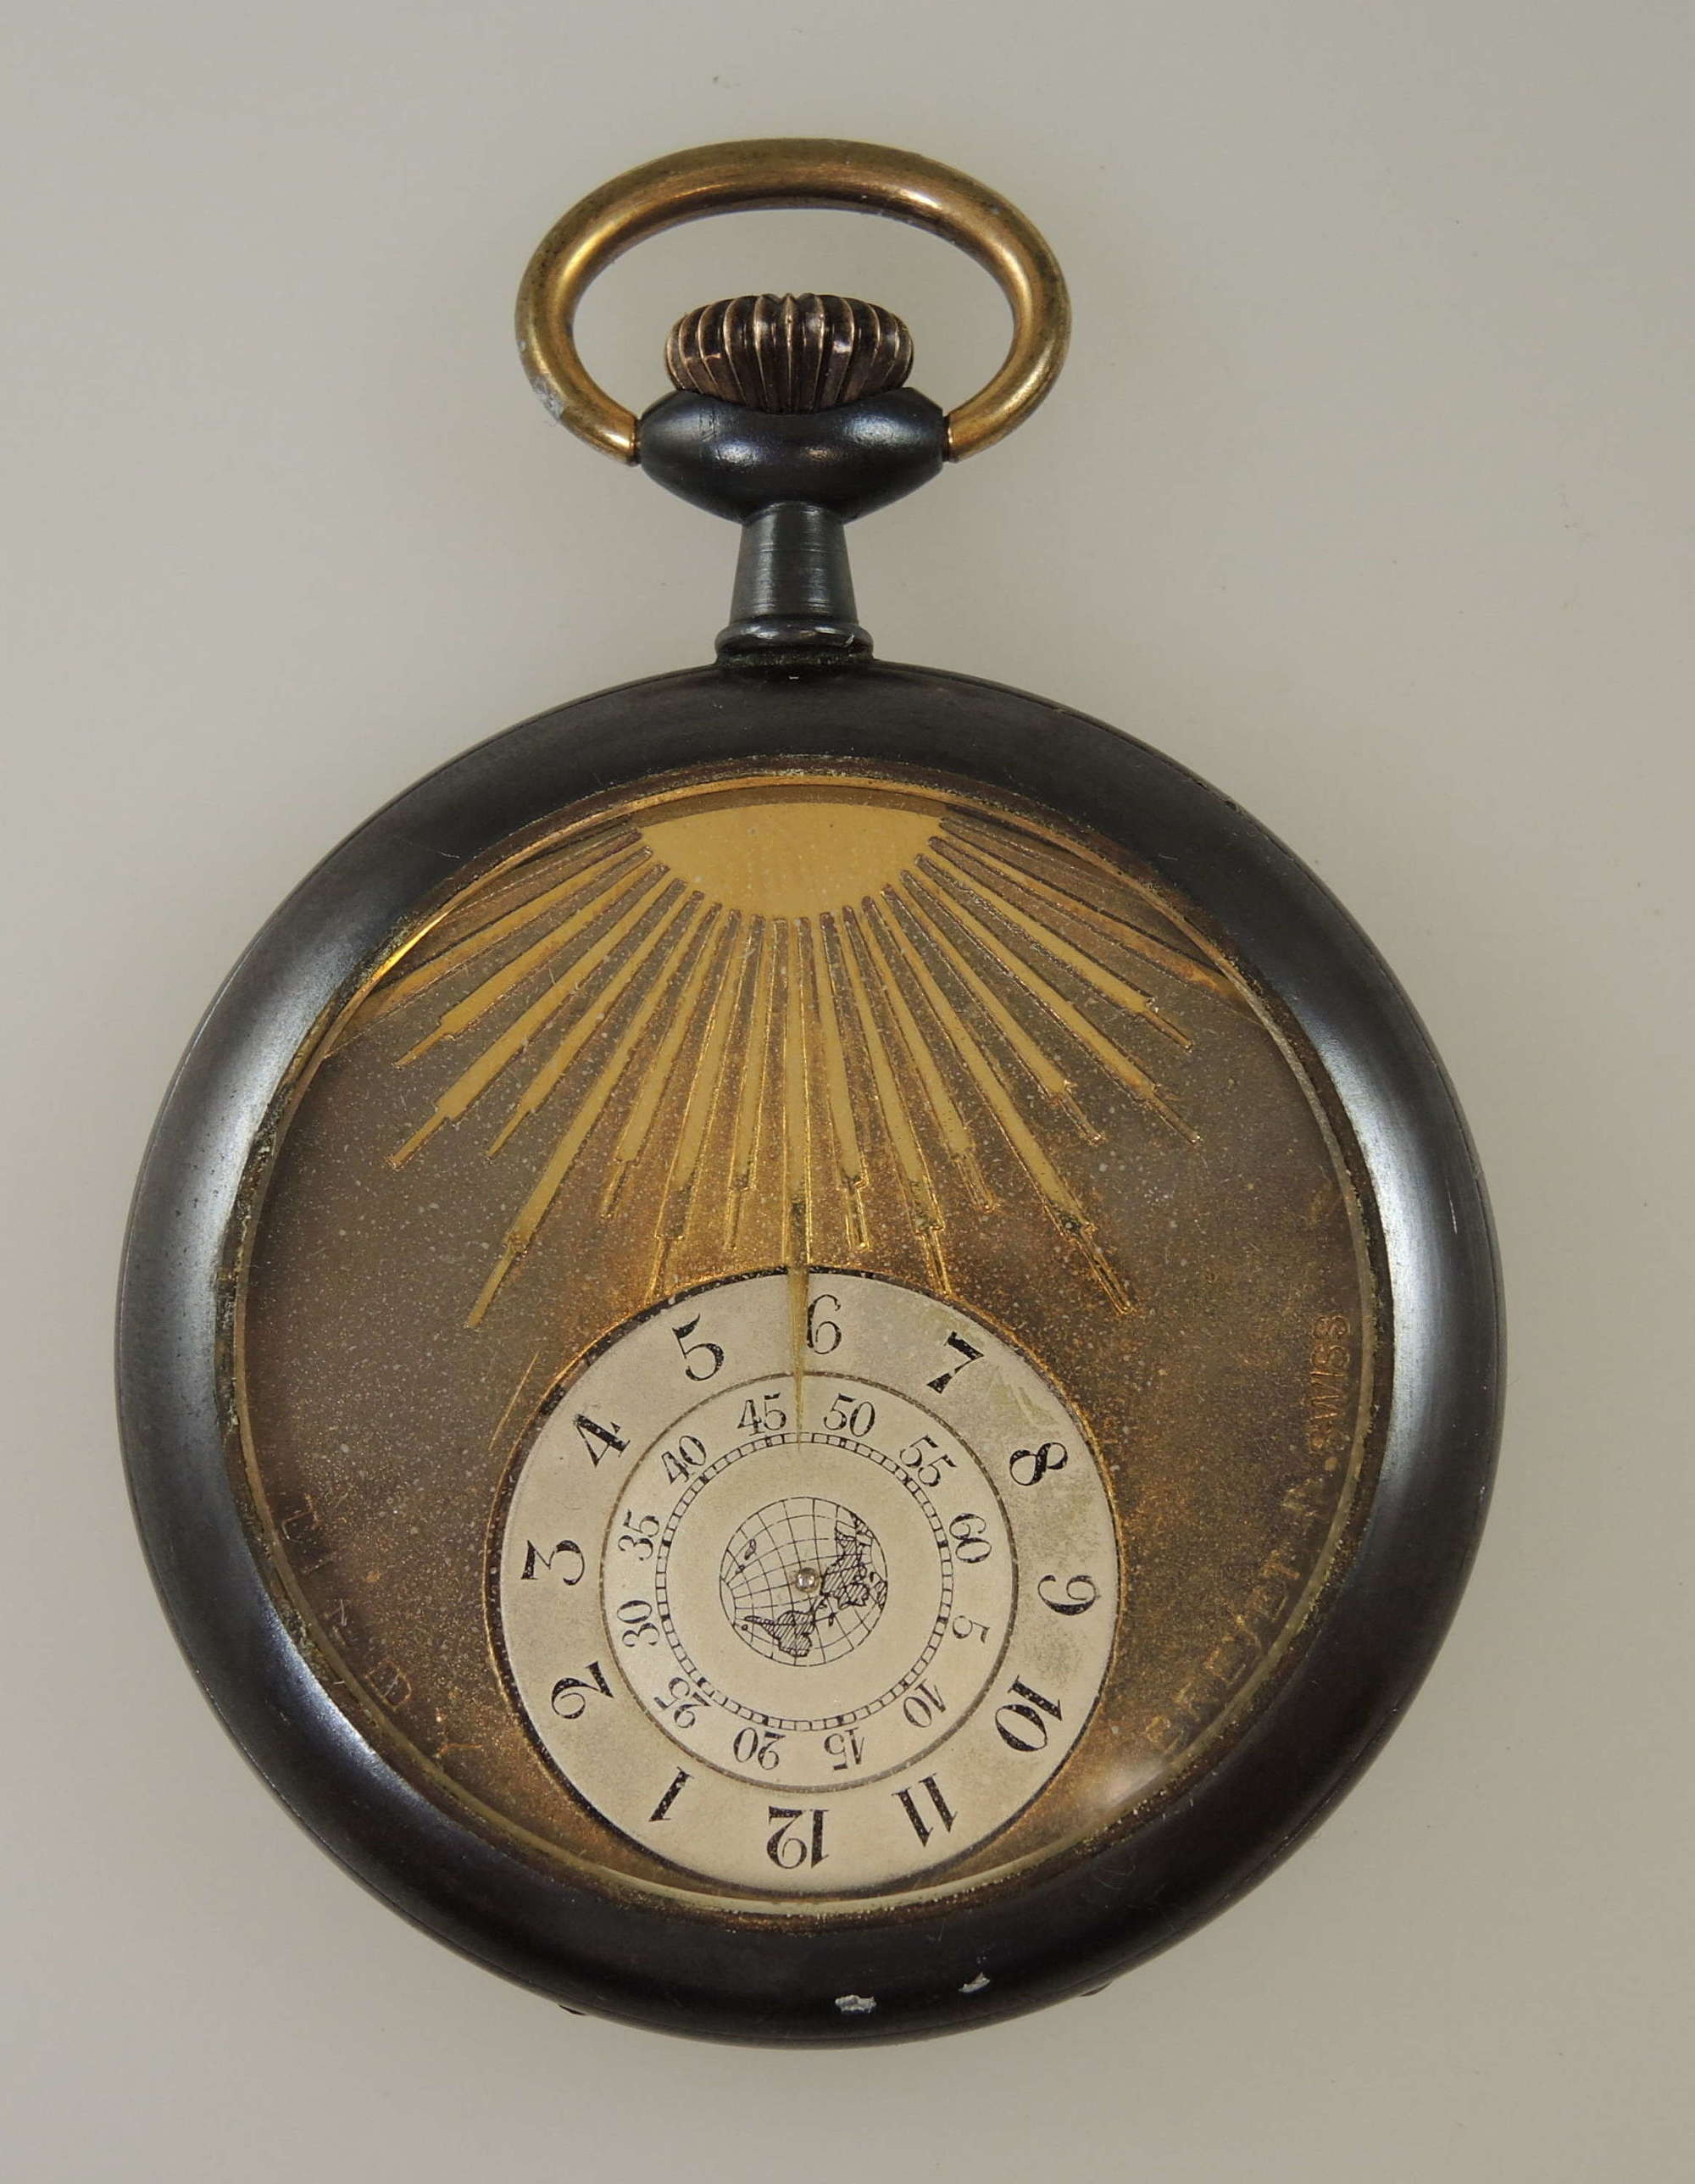 Rare revolving dial pocket watch with sunburst dial c1910